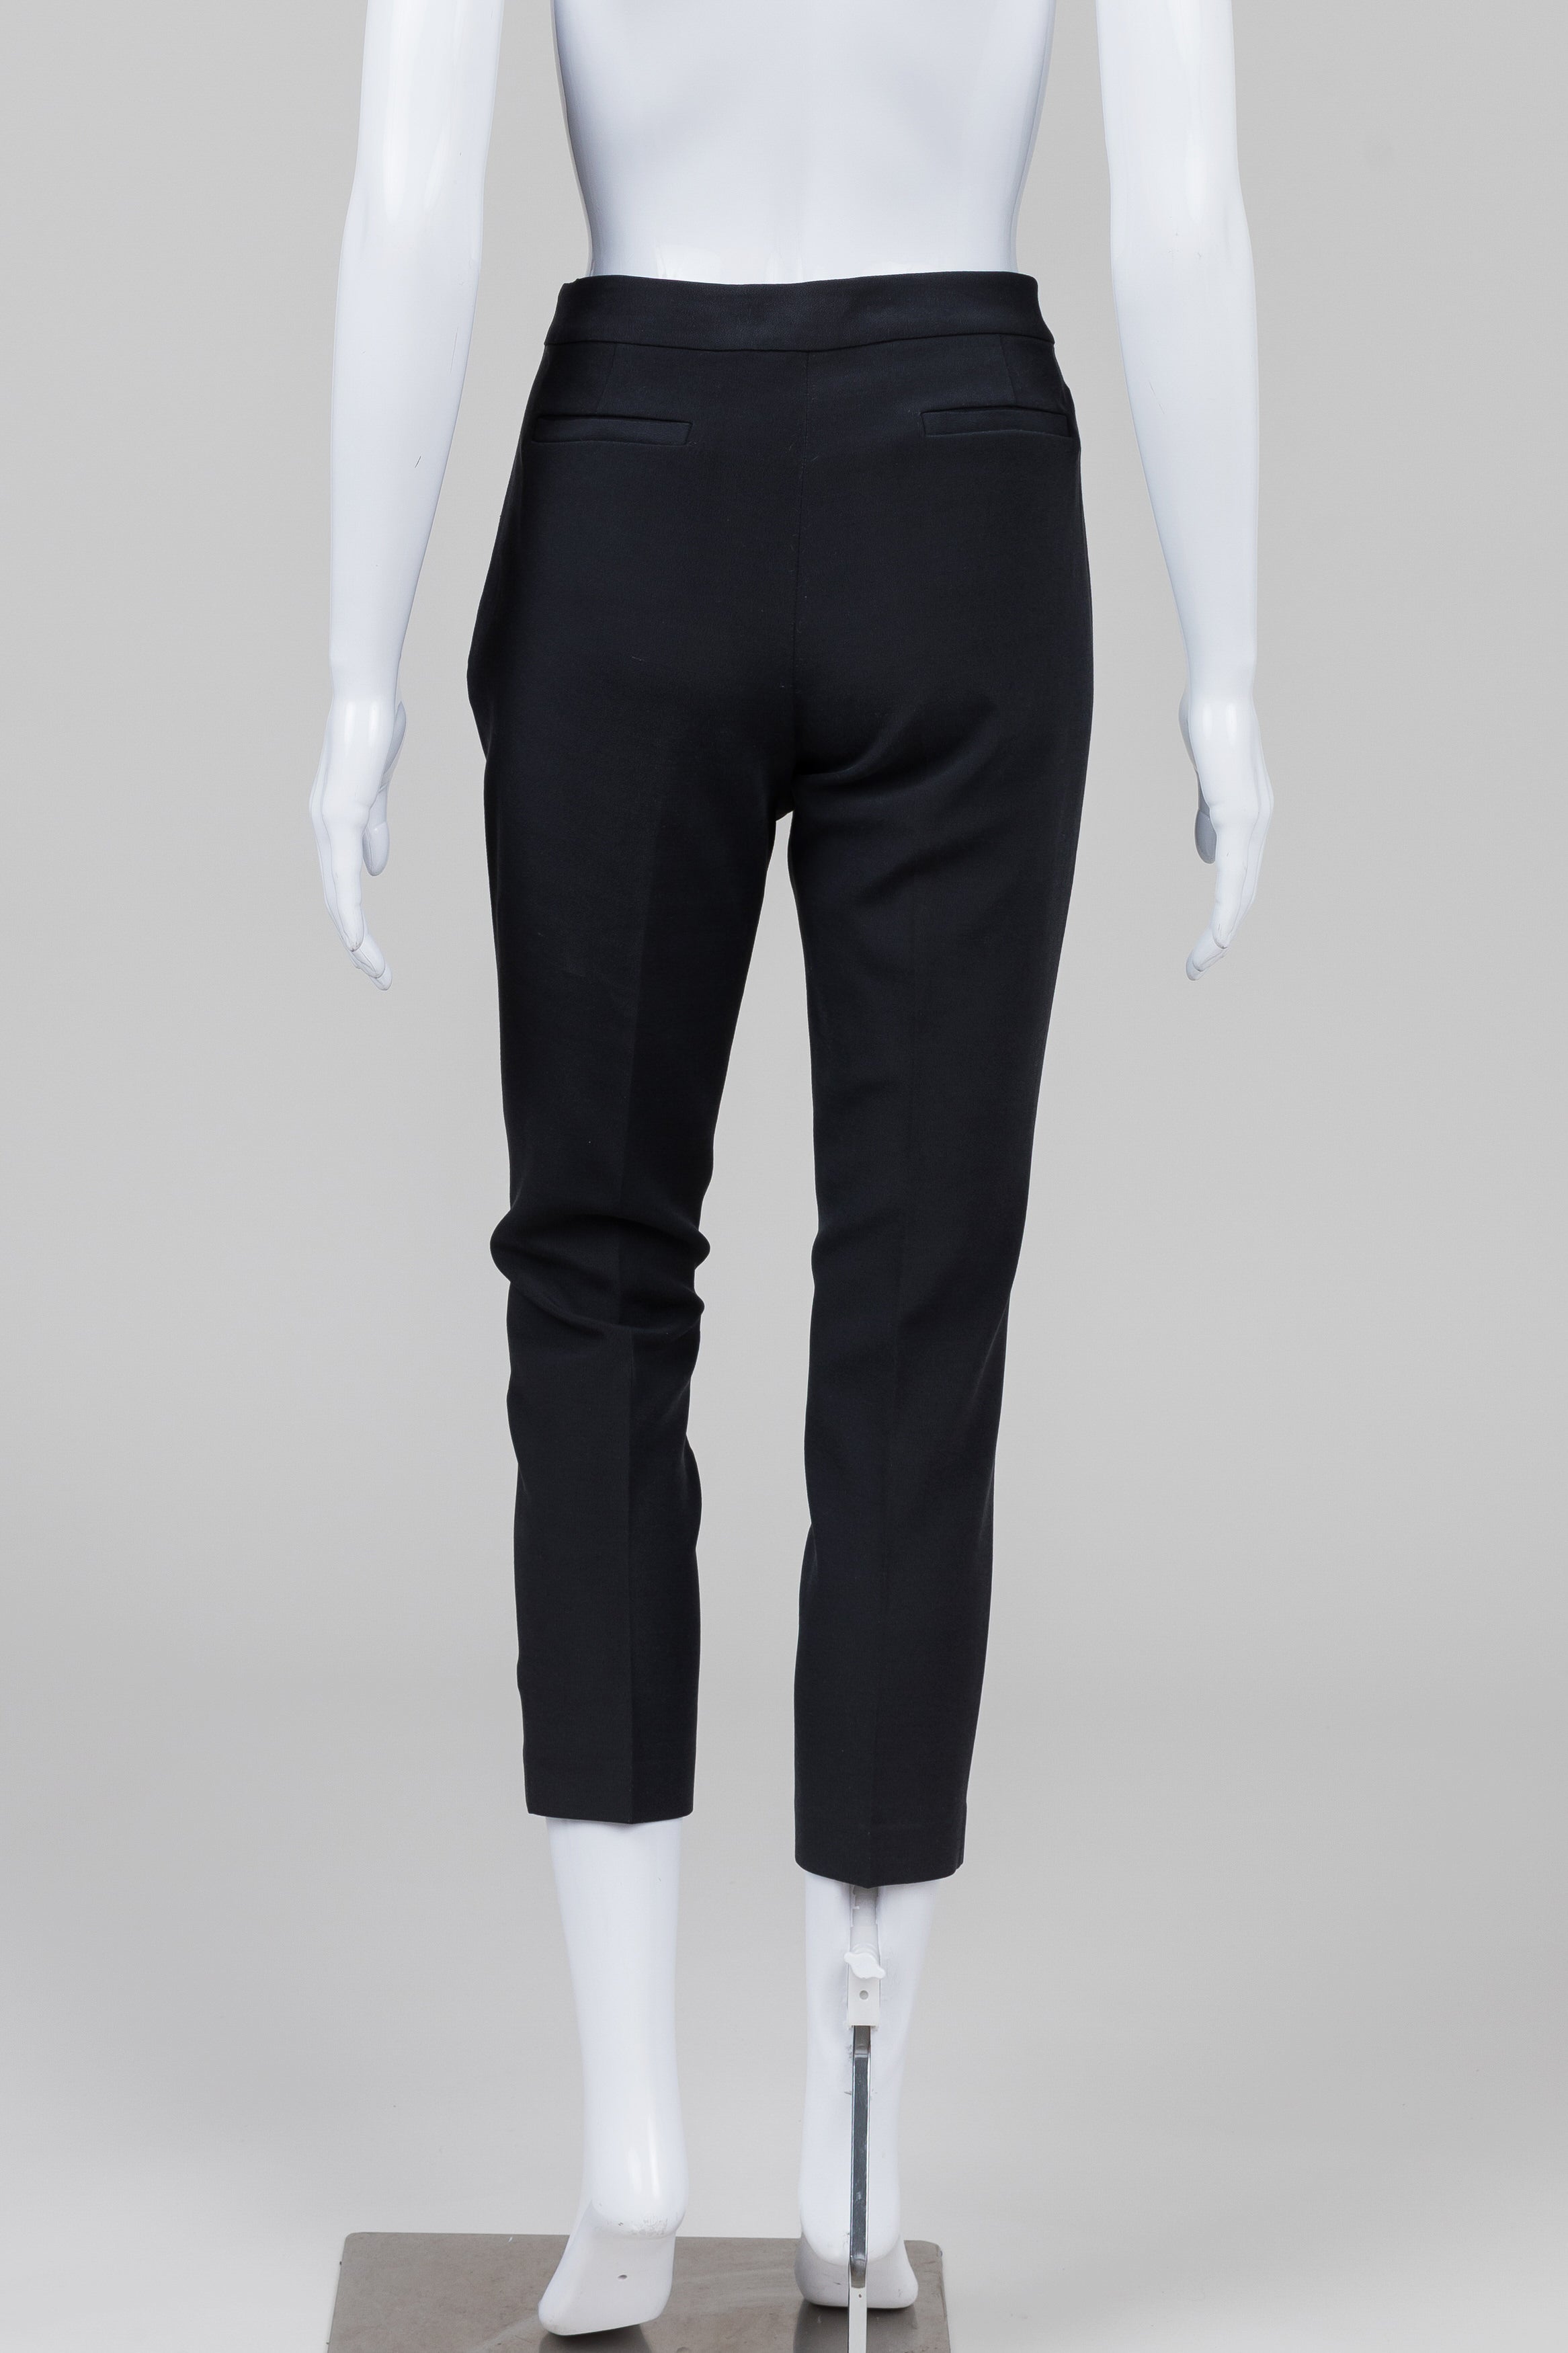 Eileen Fisher black slim trousers (8)